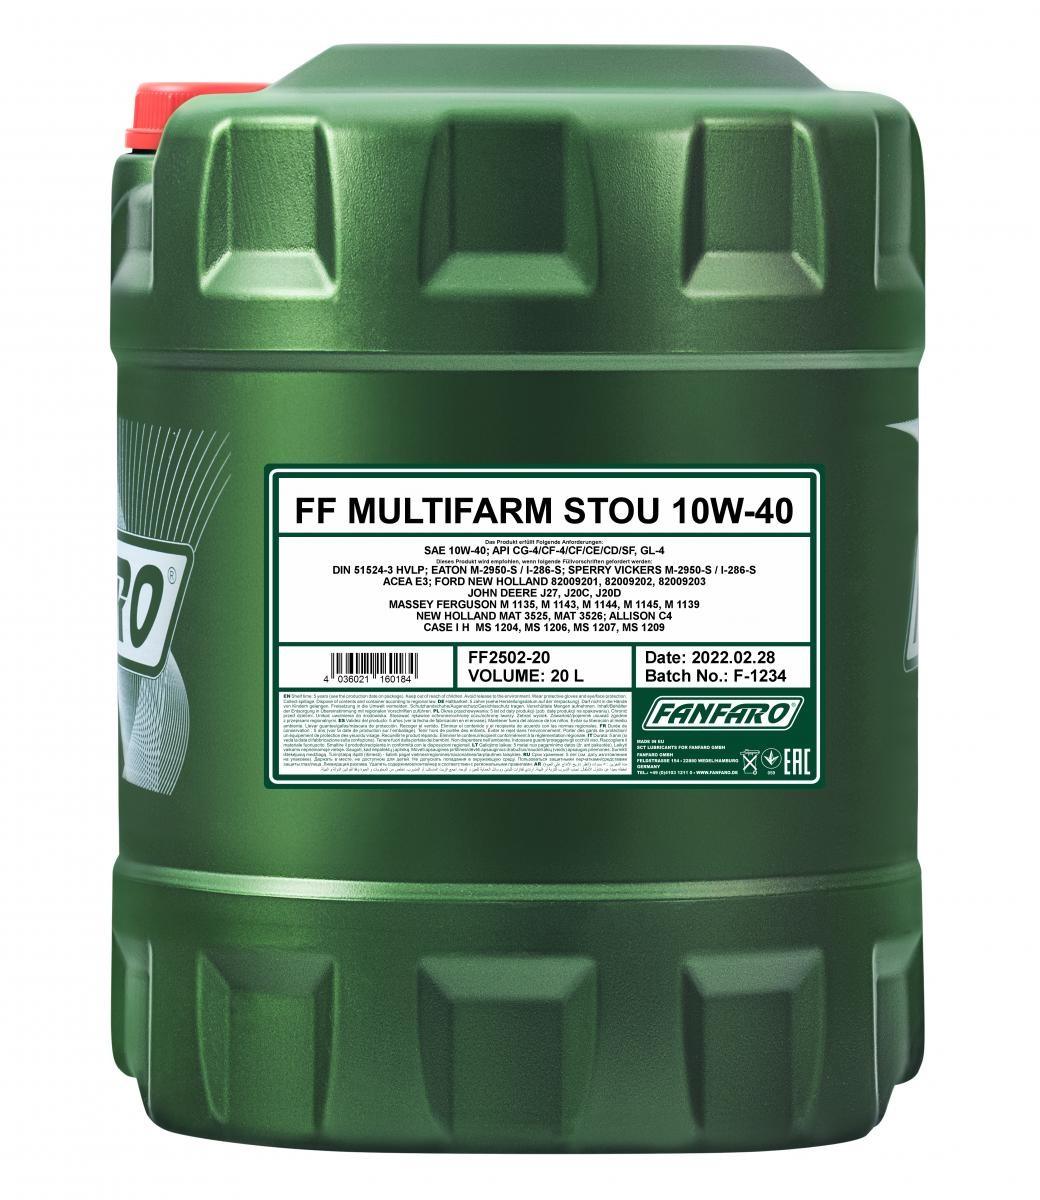 FANFARO STOU Multifarm FF250220 Multi-function Oil Canister